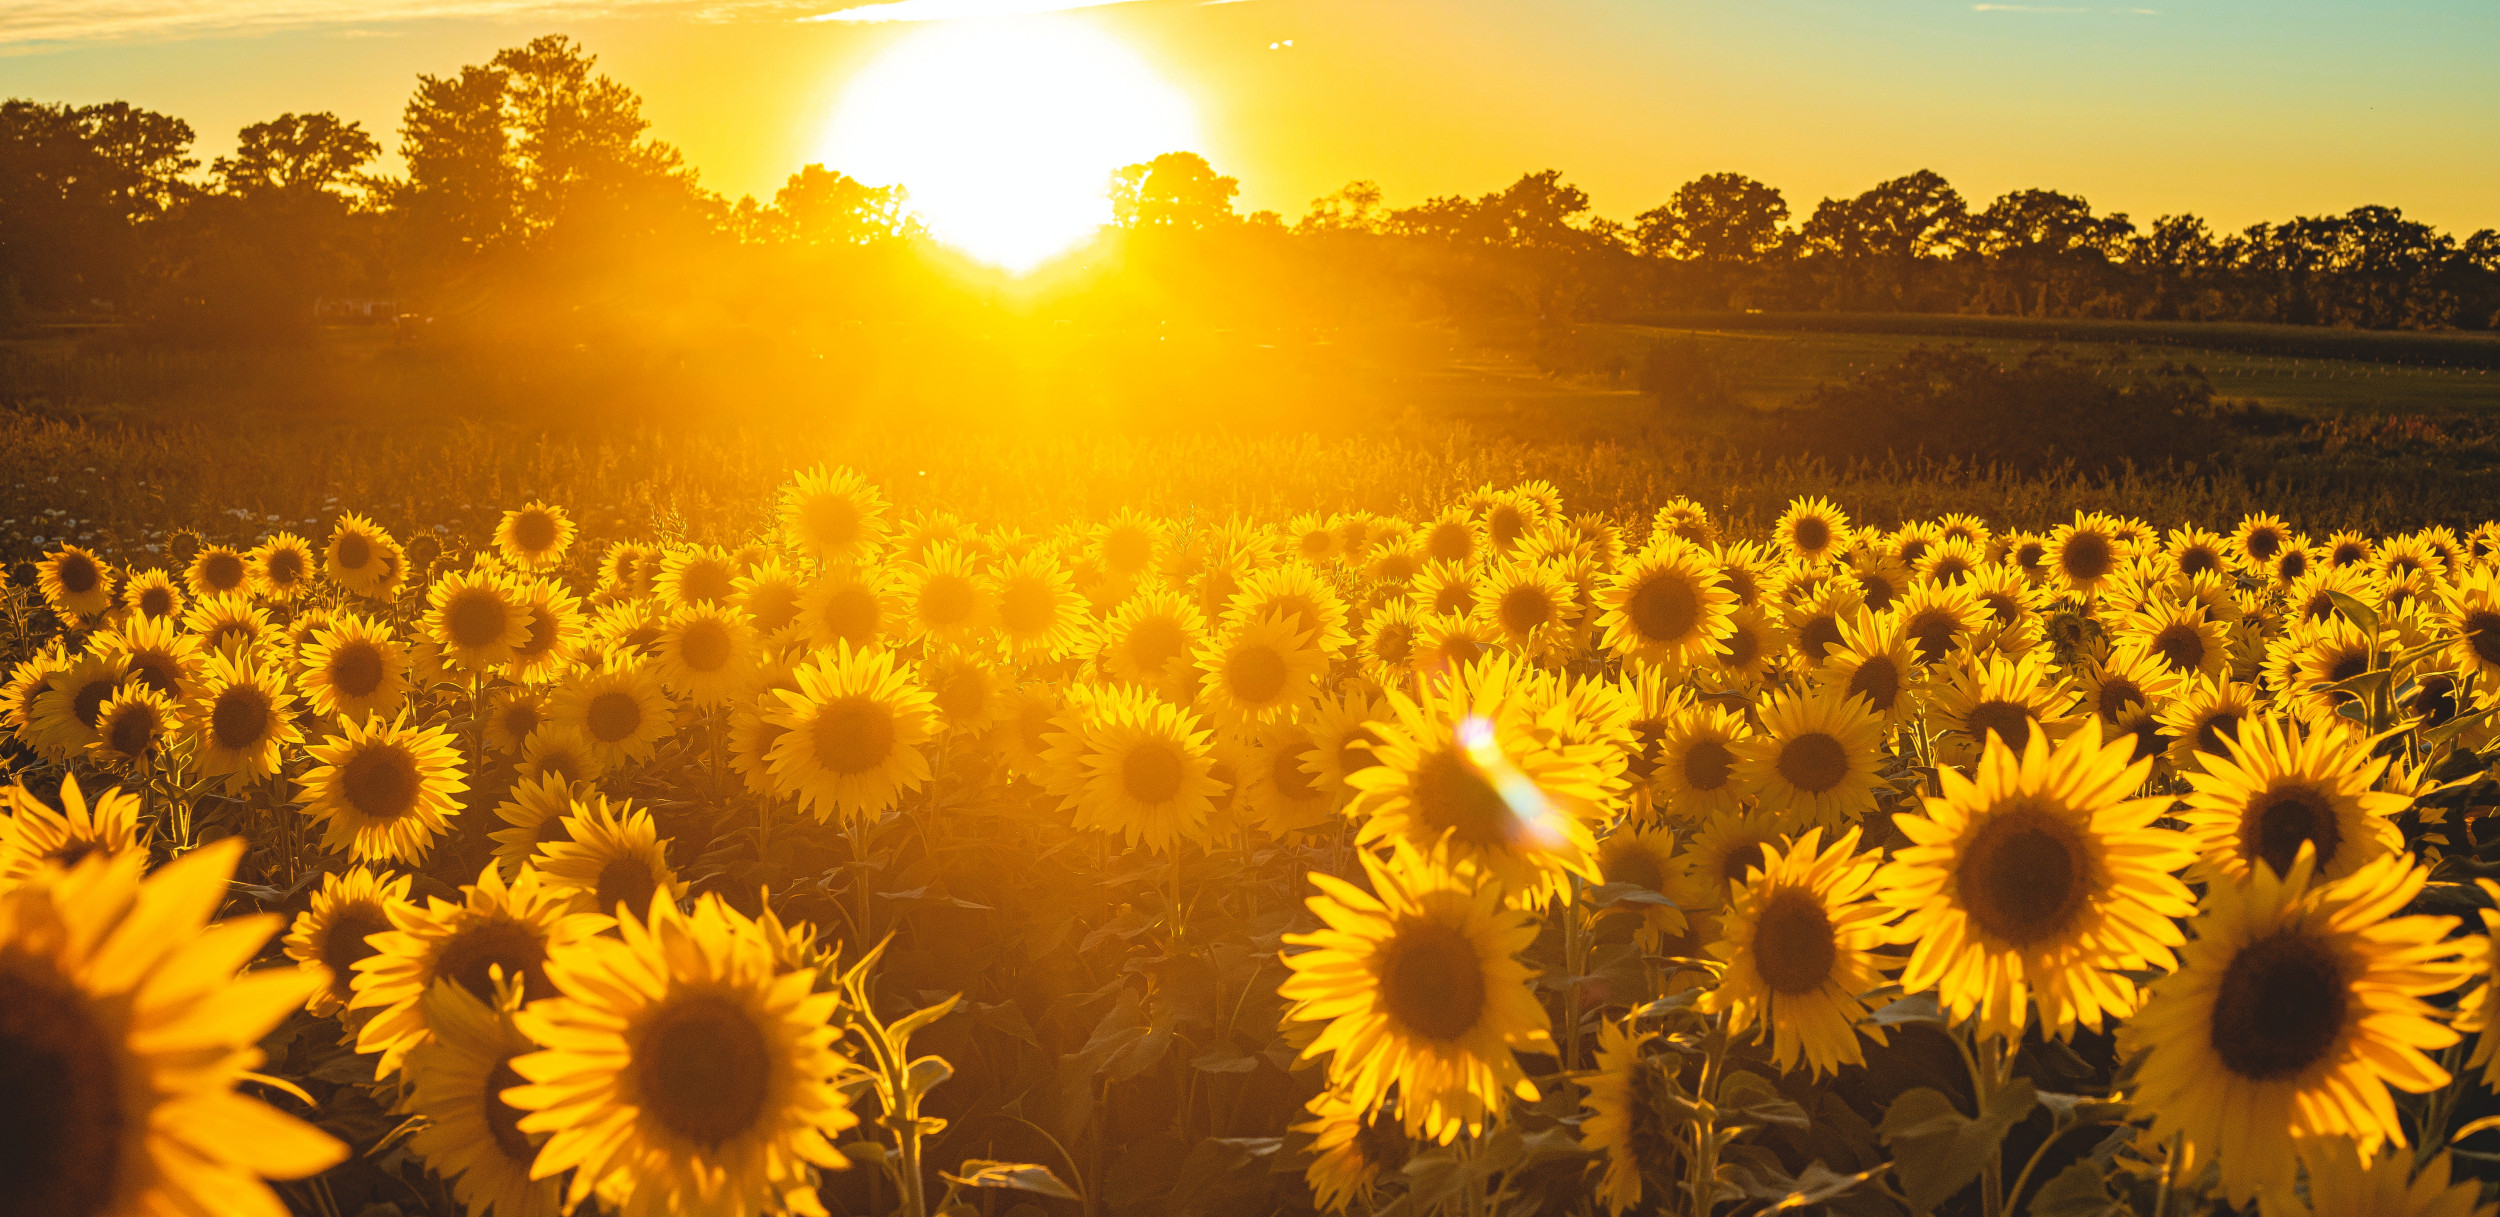 Sonnenblumen / Sunflowers by todd kent on Unsplash